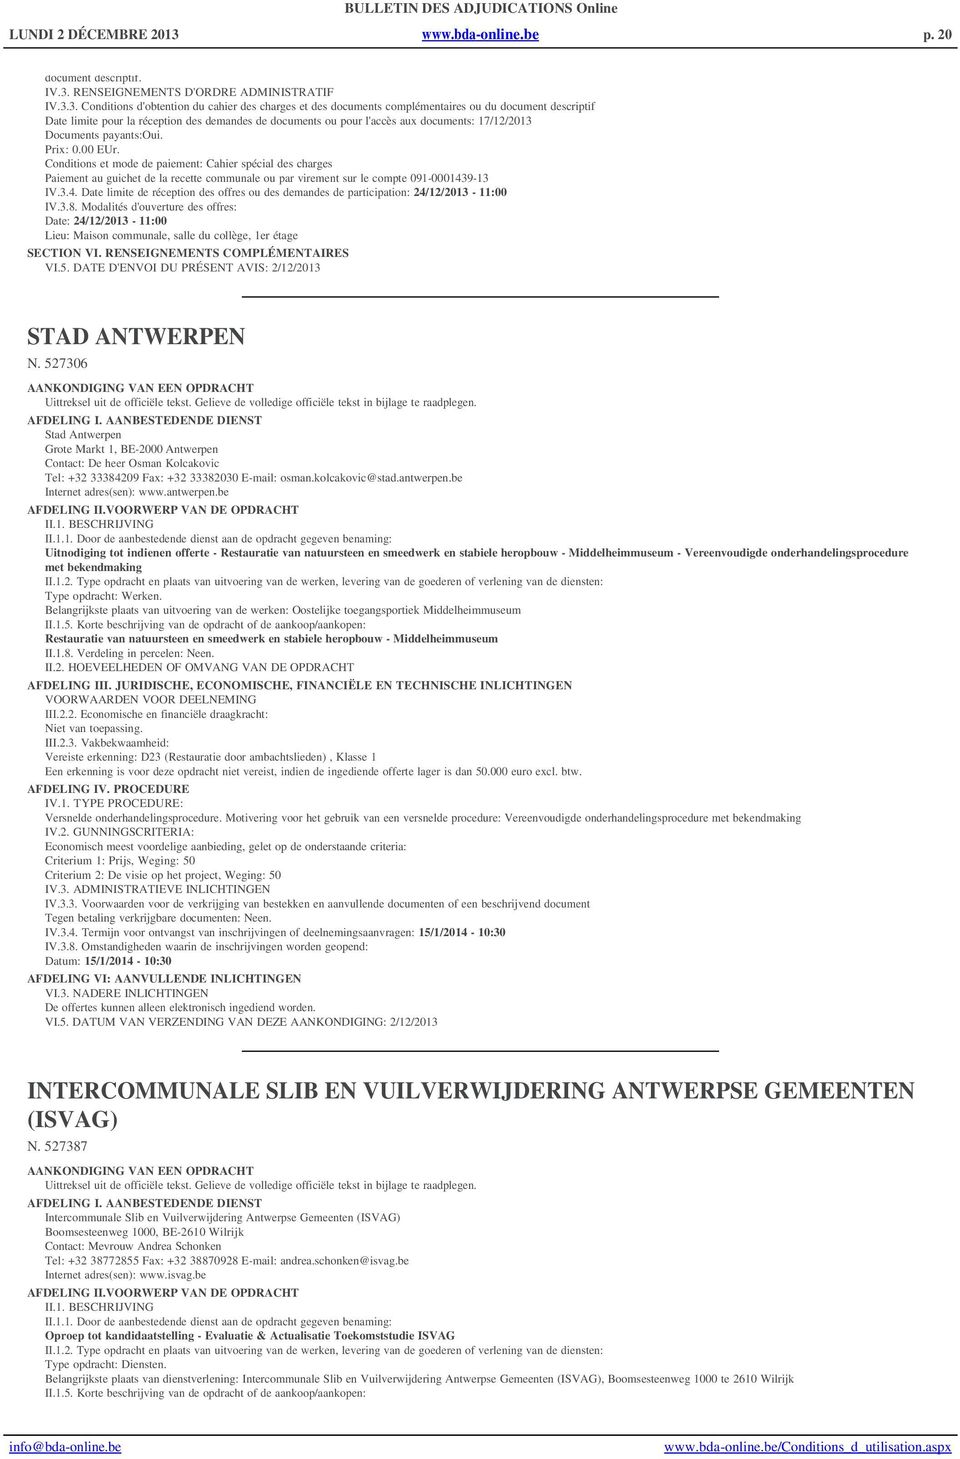 RENSEIGNEMENTS D'ORDRE ADMINISTRATIF IV.3.